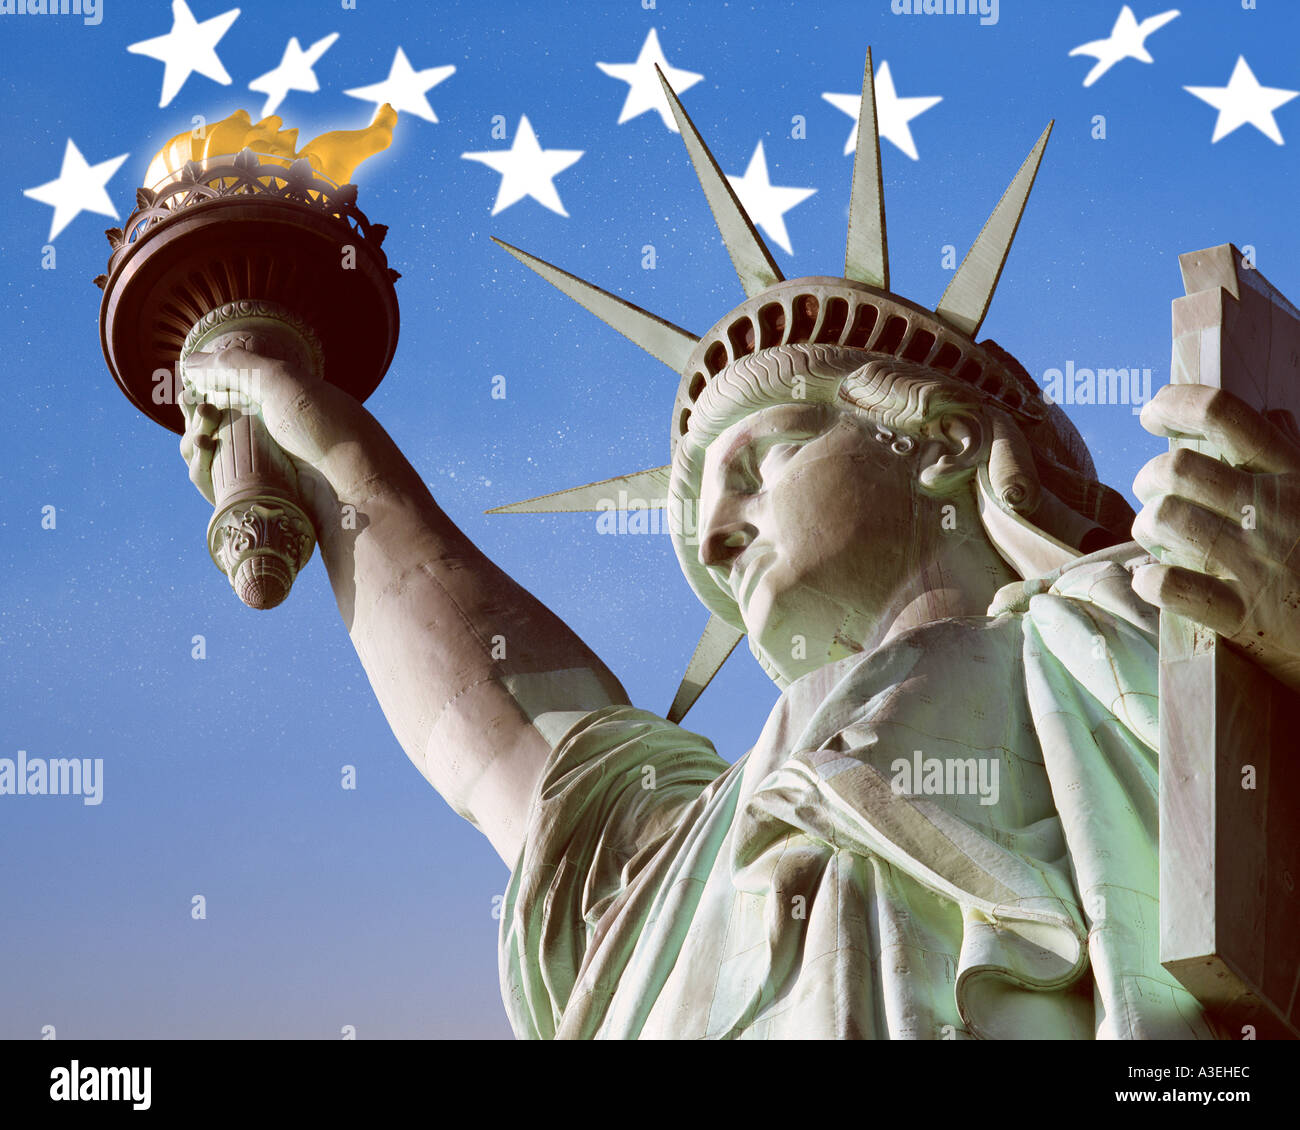 AMERICANA: Statue of Liberty in New York Stock Photo